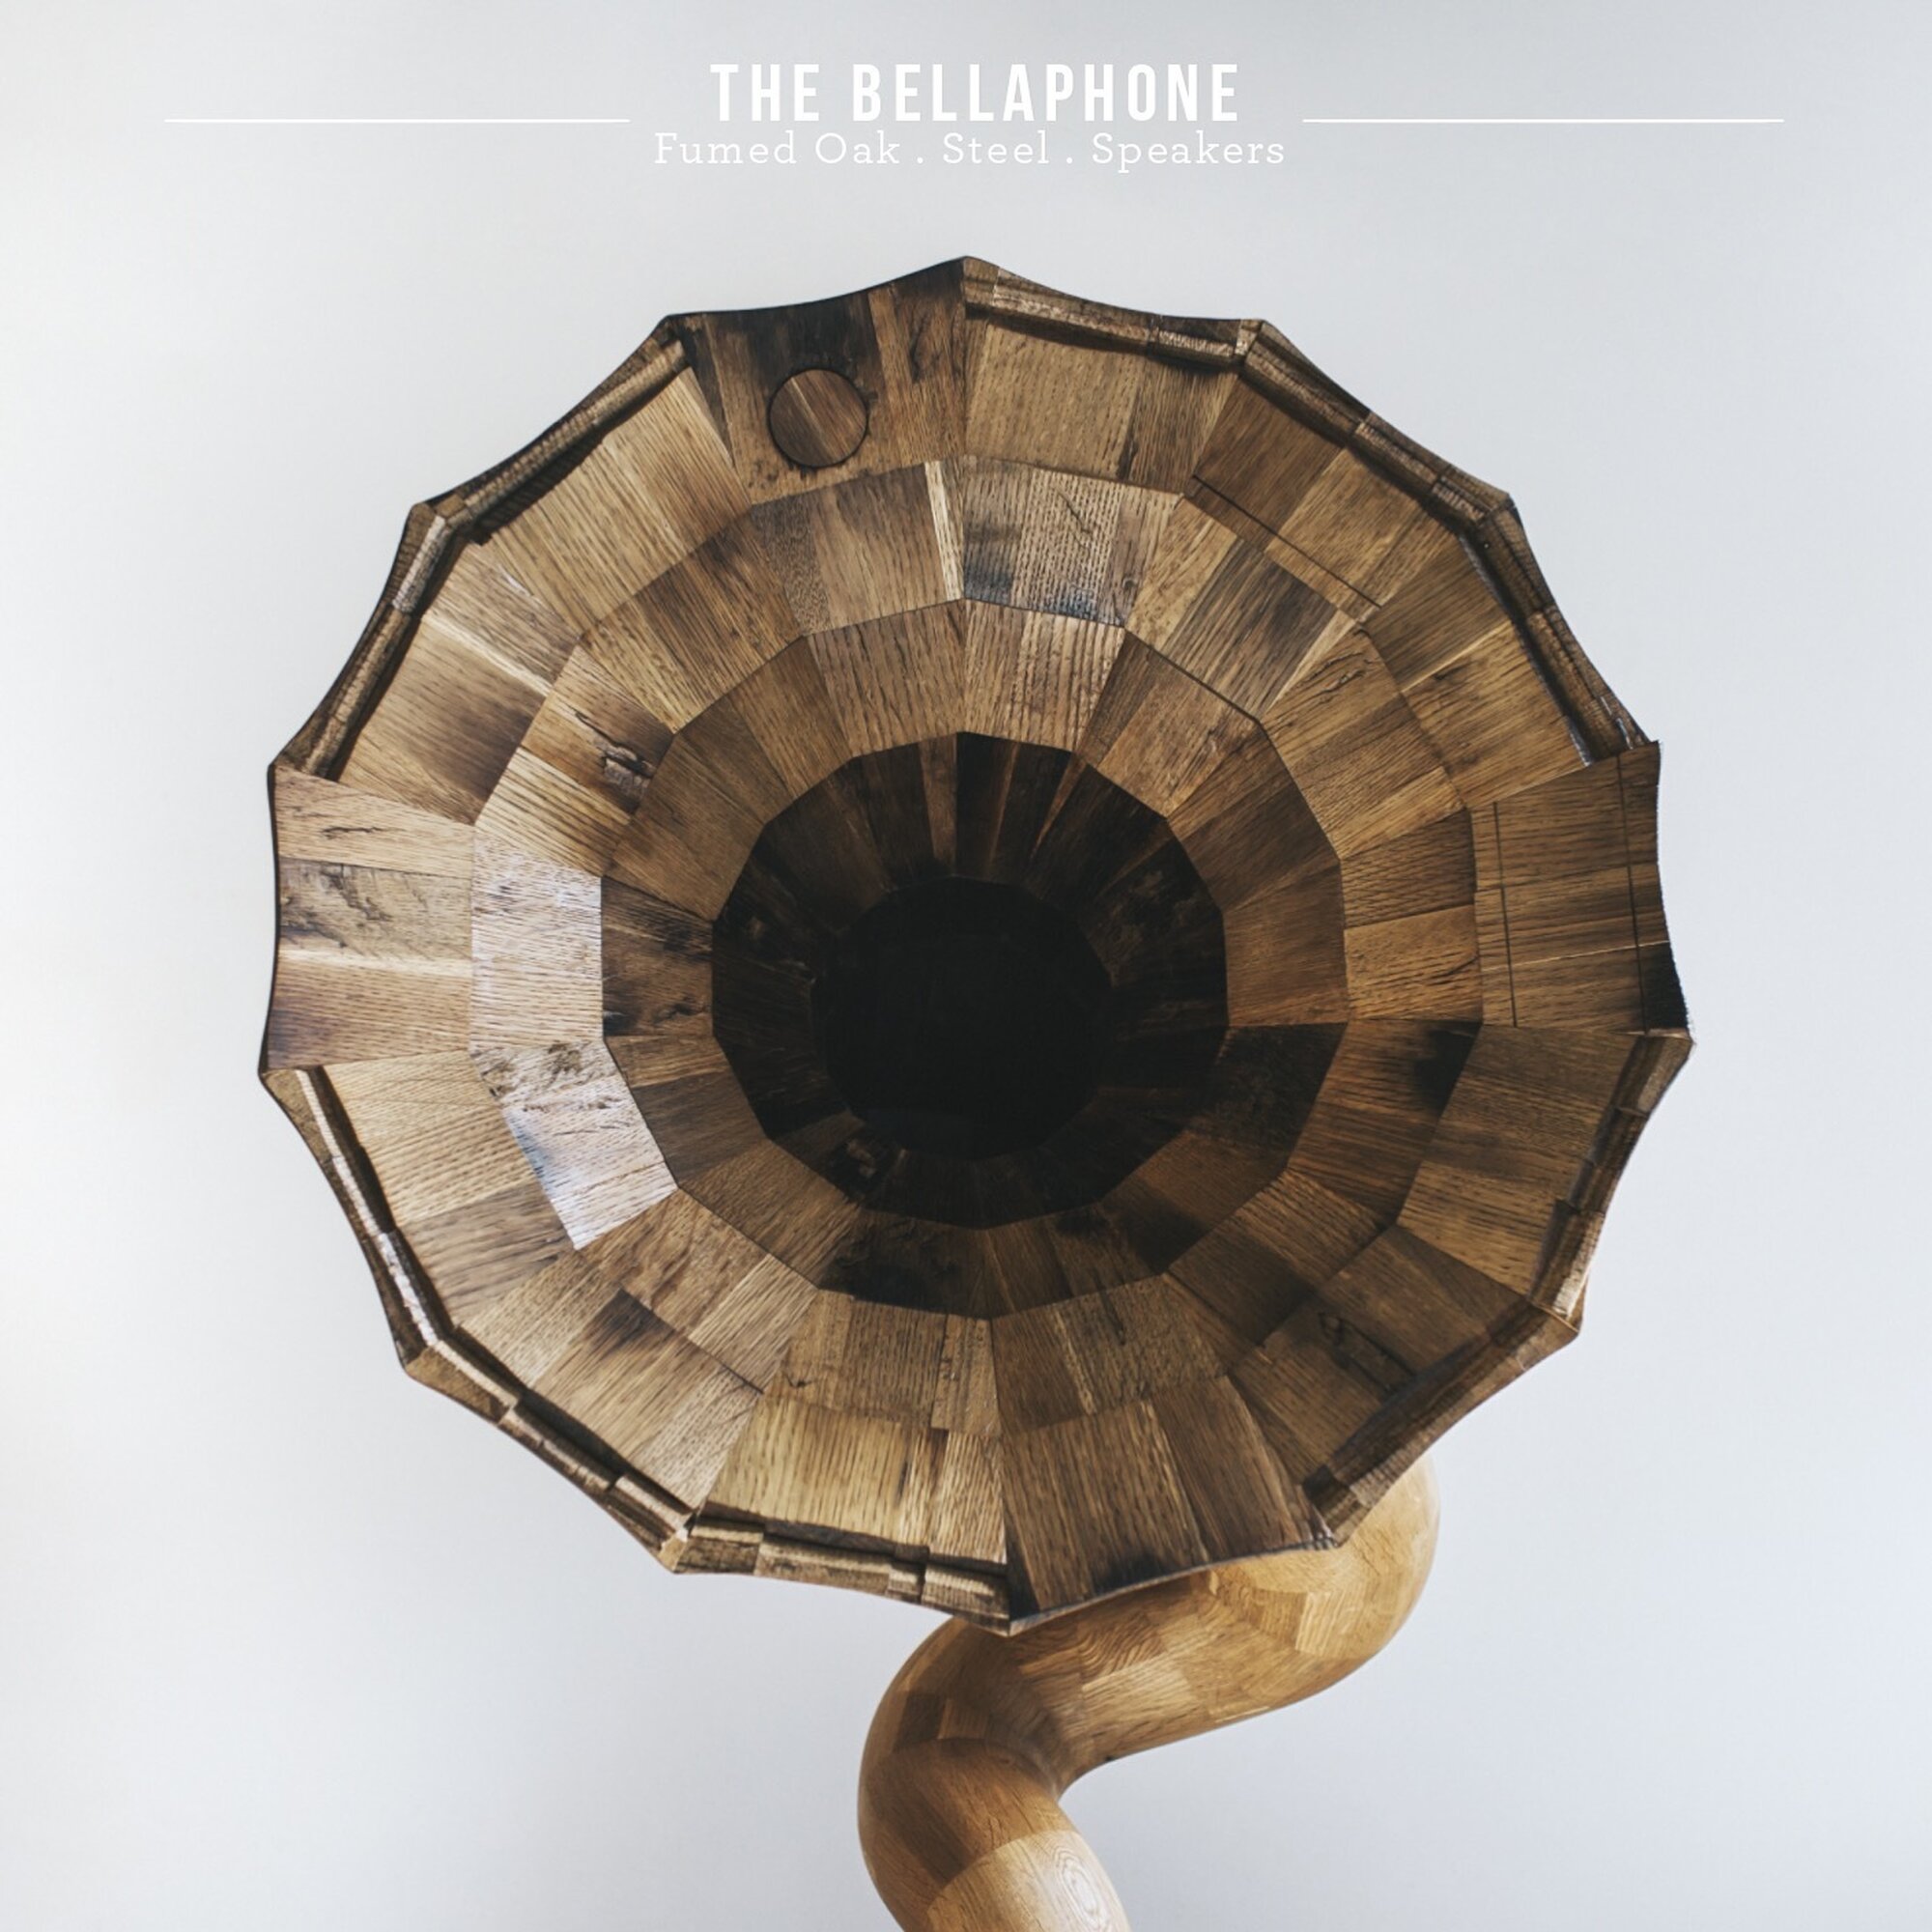 The Bellaphone